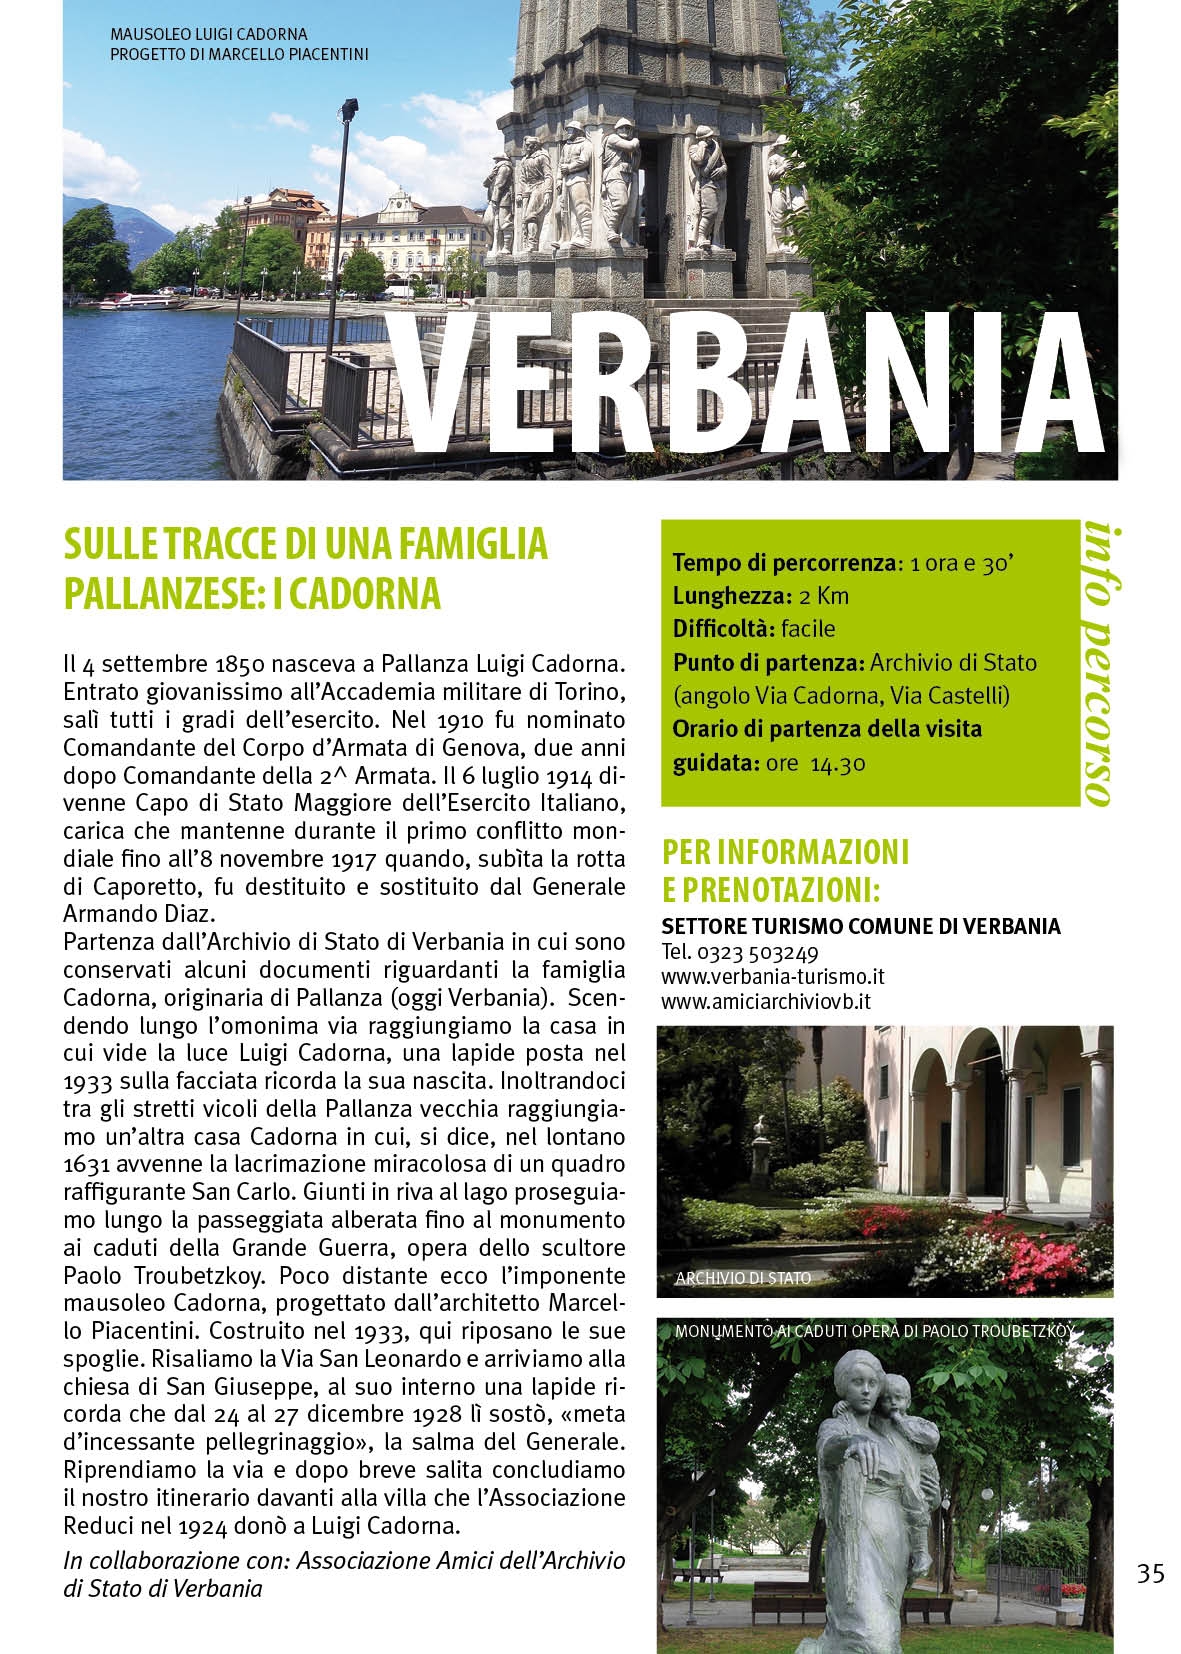 Verbania - Trekking urbano